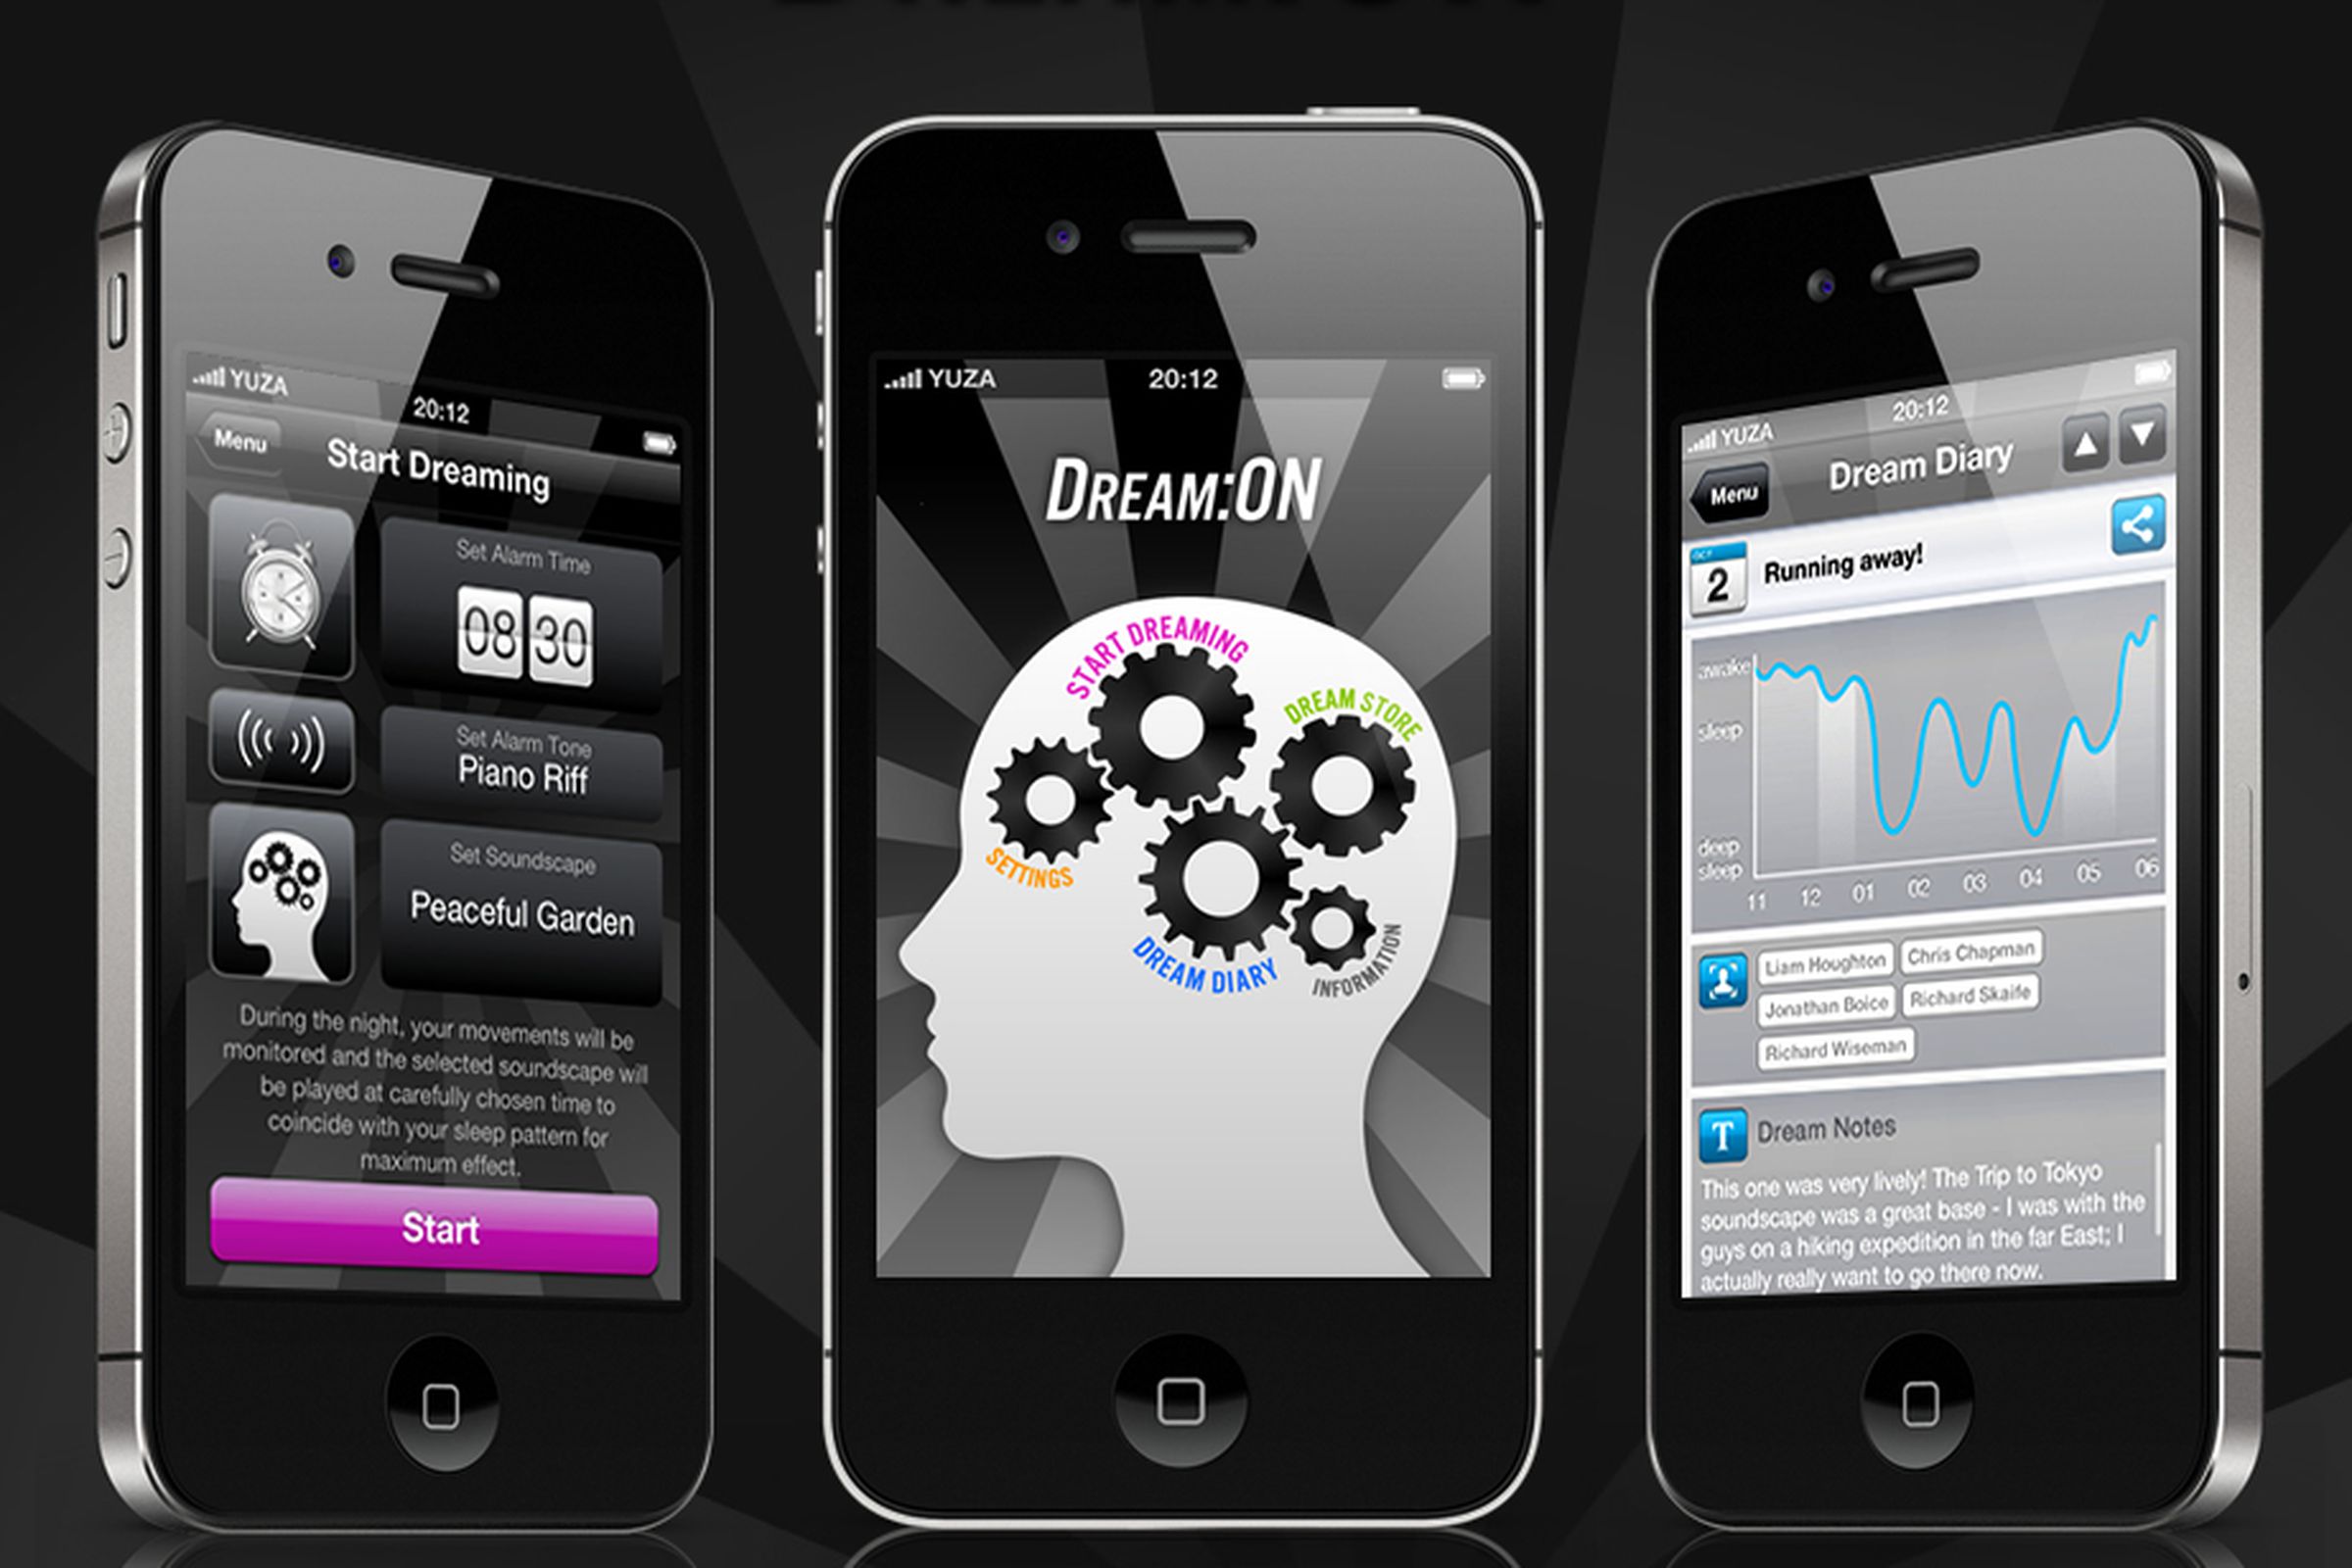 Dream:ON iphone app